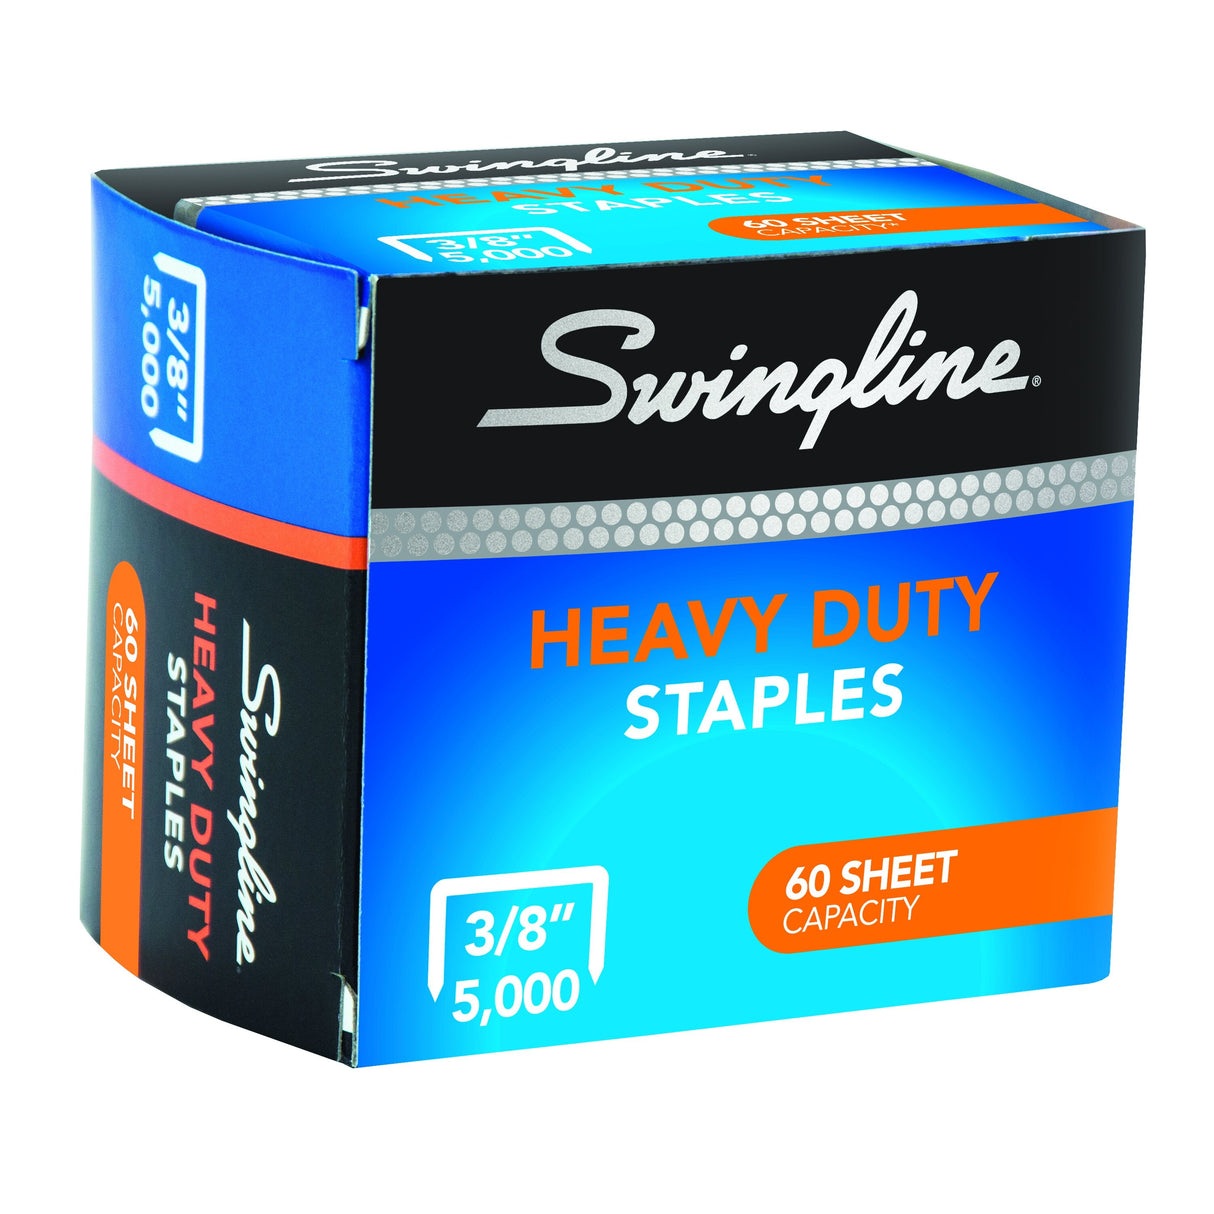 Swingline Heavy Duty Staples, 3/8" Leg Length, 5,000/Box